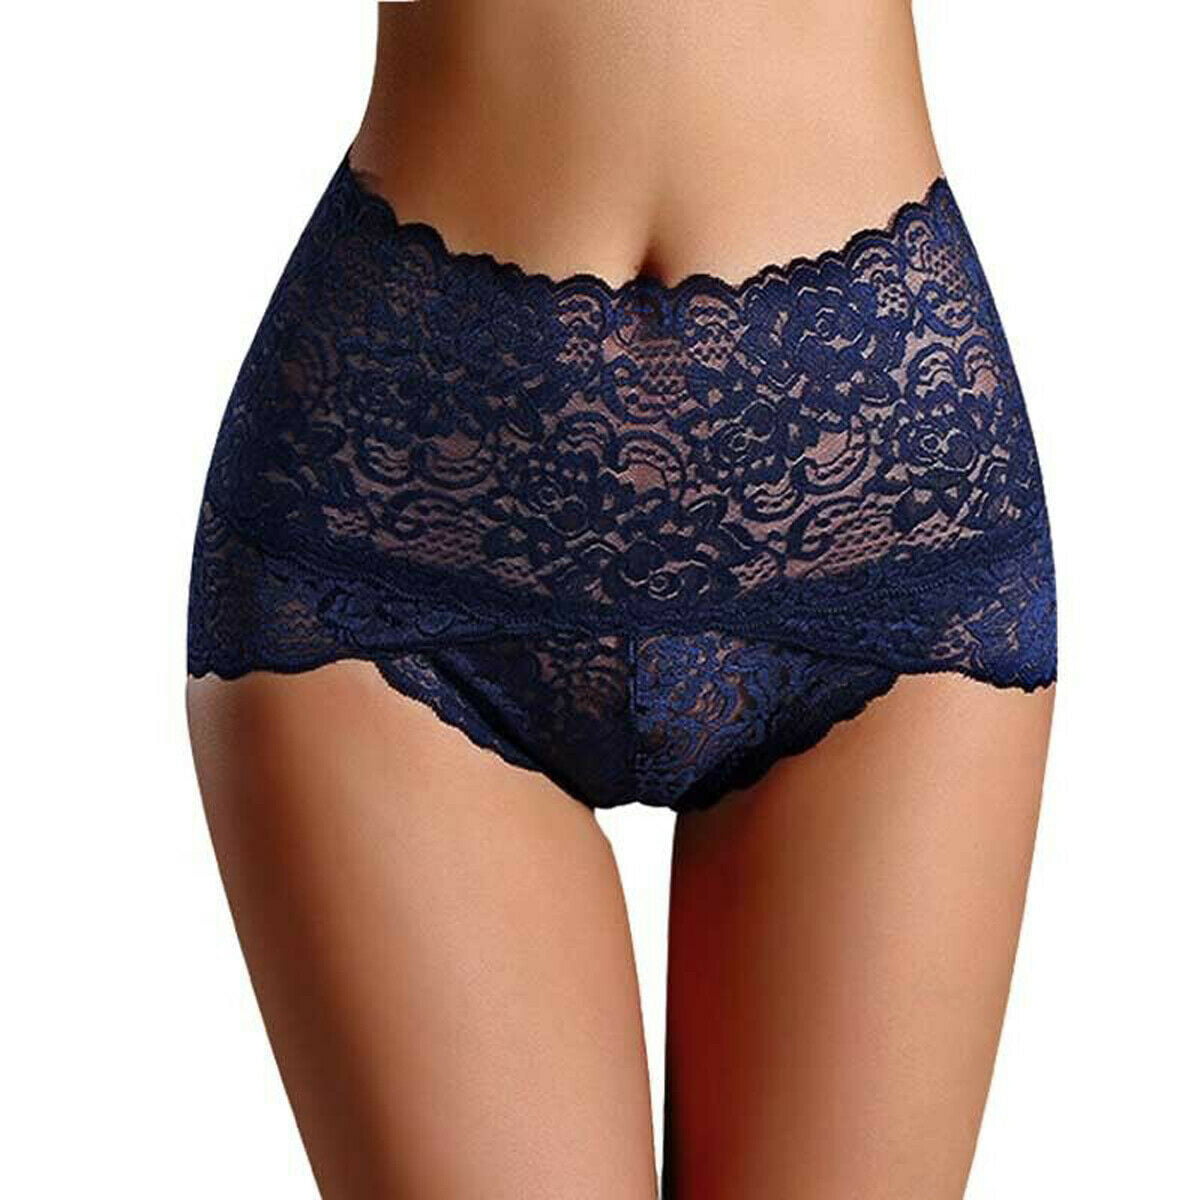 Women Lace Underwear Hot G-string Briefs Panties Thongs Lingerie Knickers